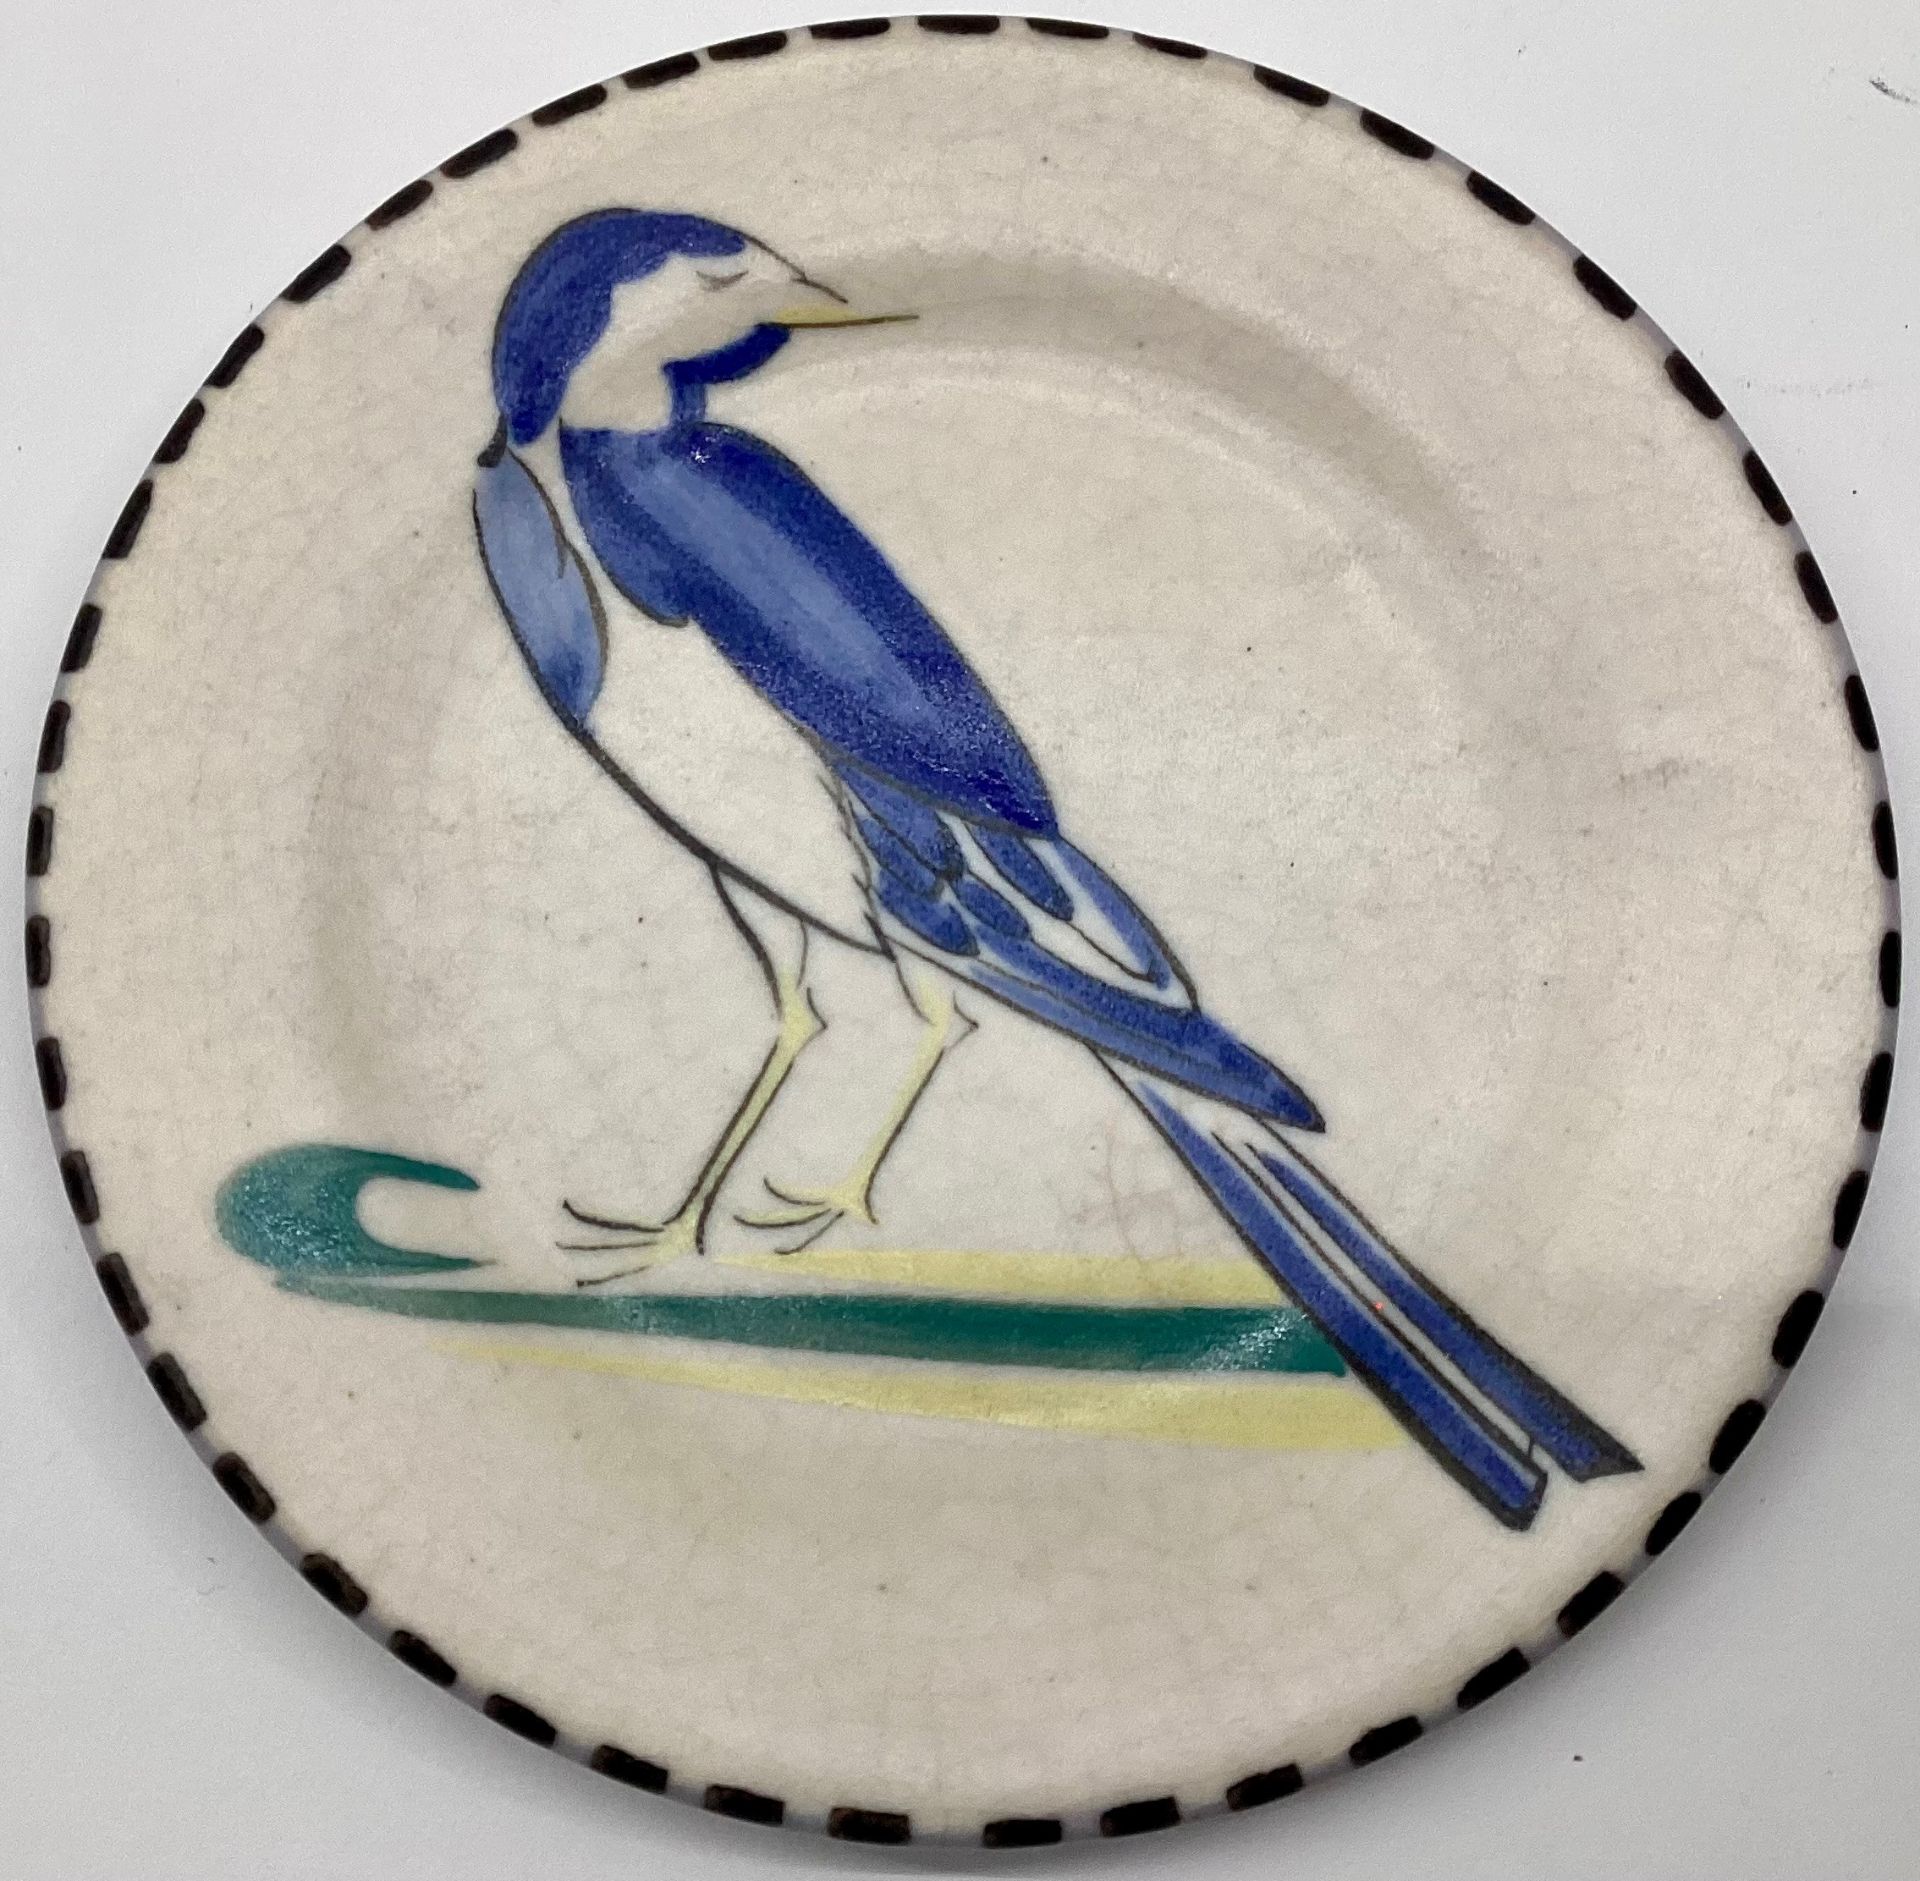 Poole Pottery Carter Stabler Adams shape 557 ST pattern miniature plate depicting a bird 4.8" dia.